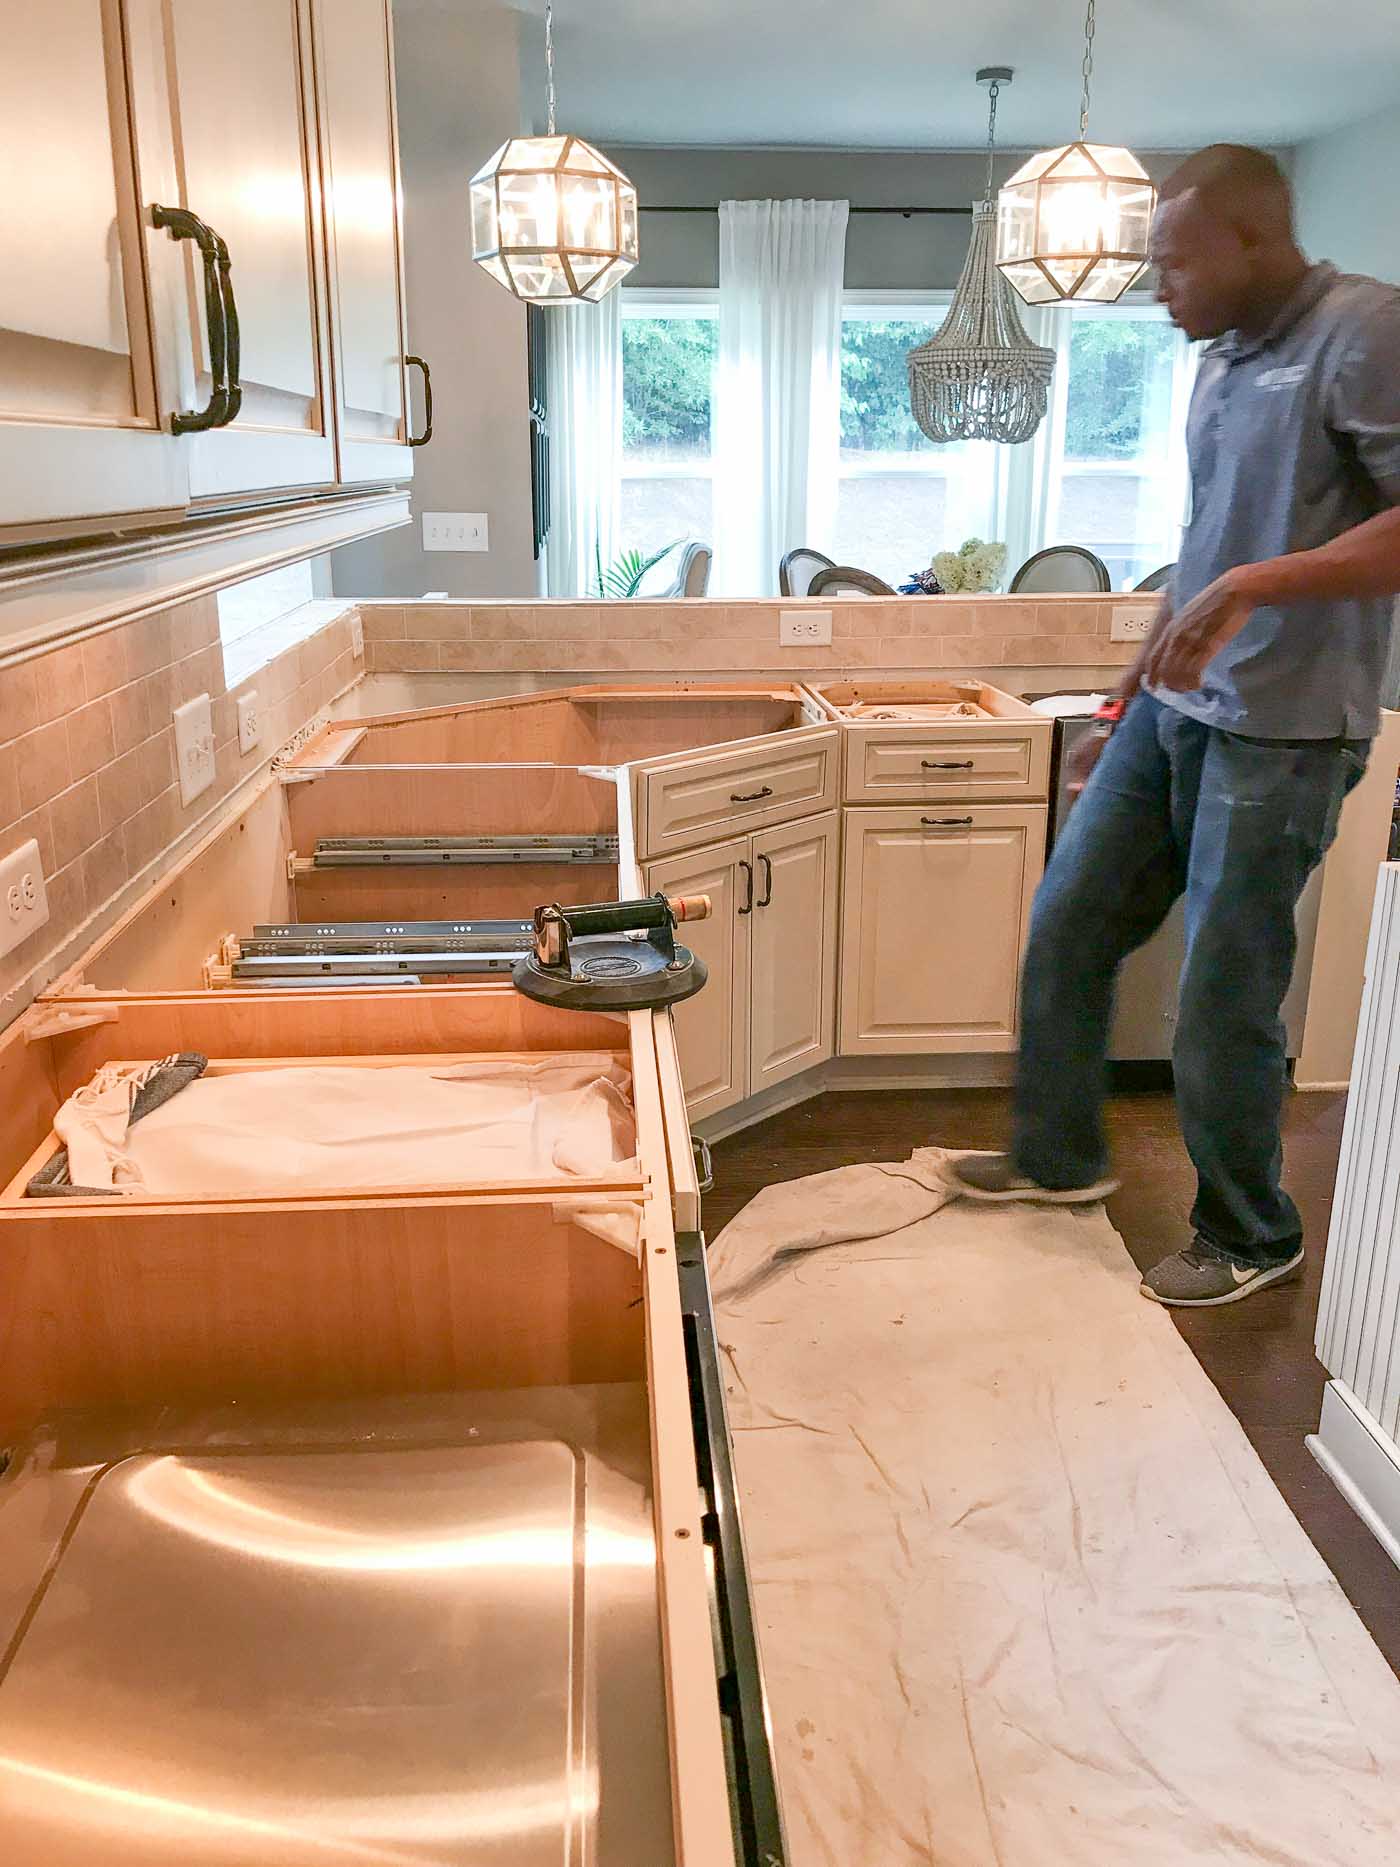 Switching granite countertops for quartz to brighten the kitchen